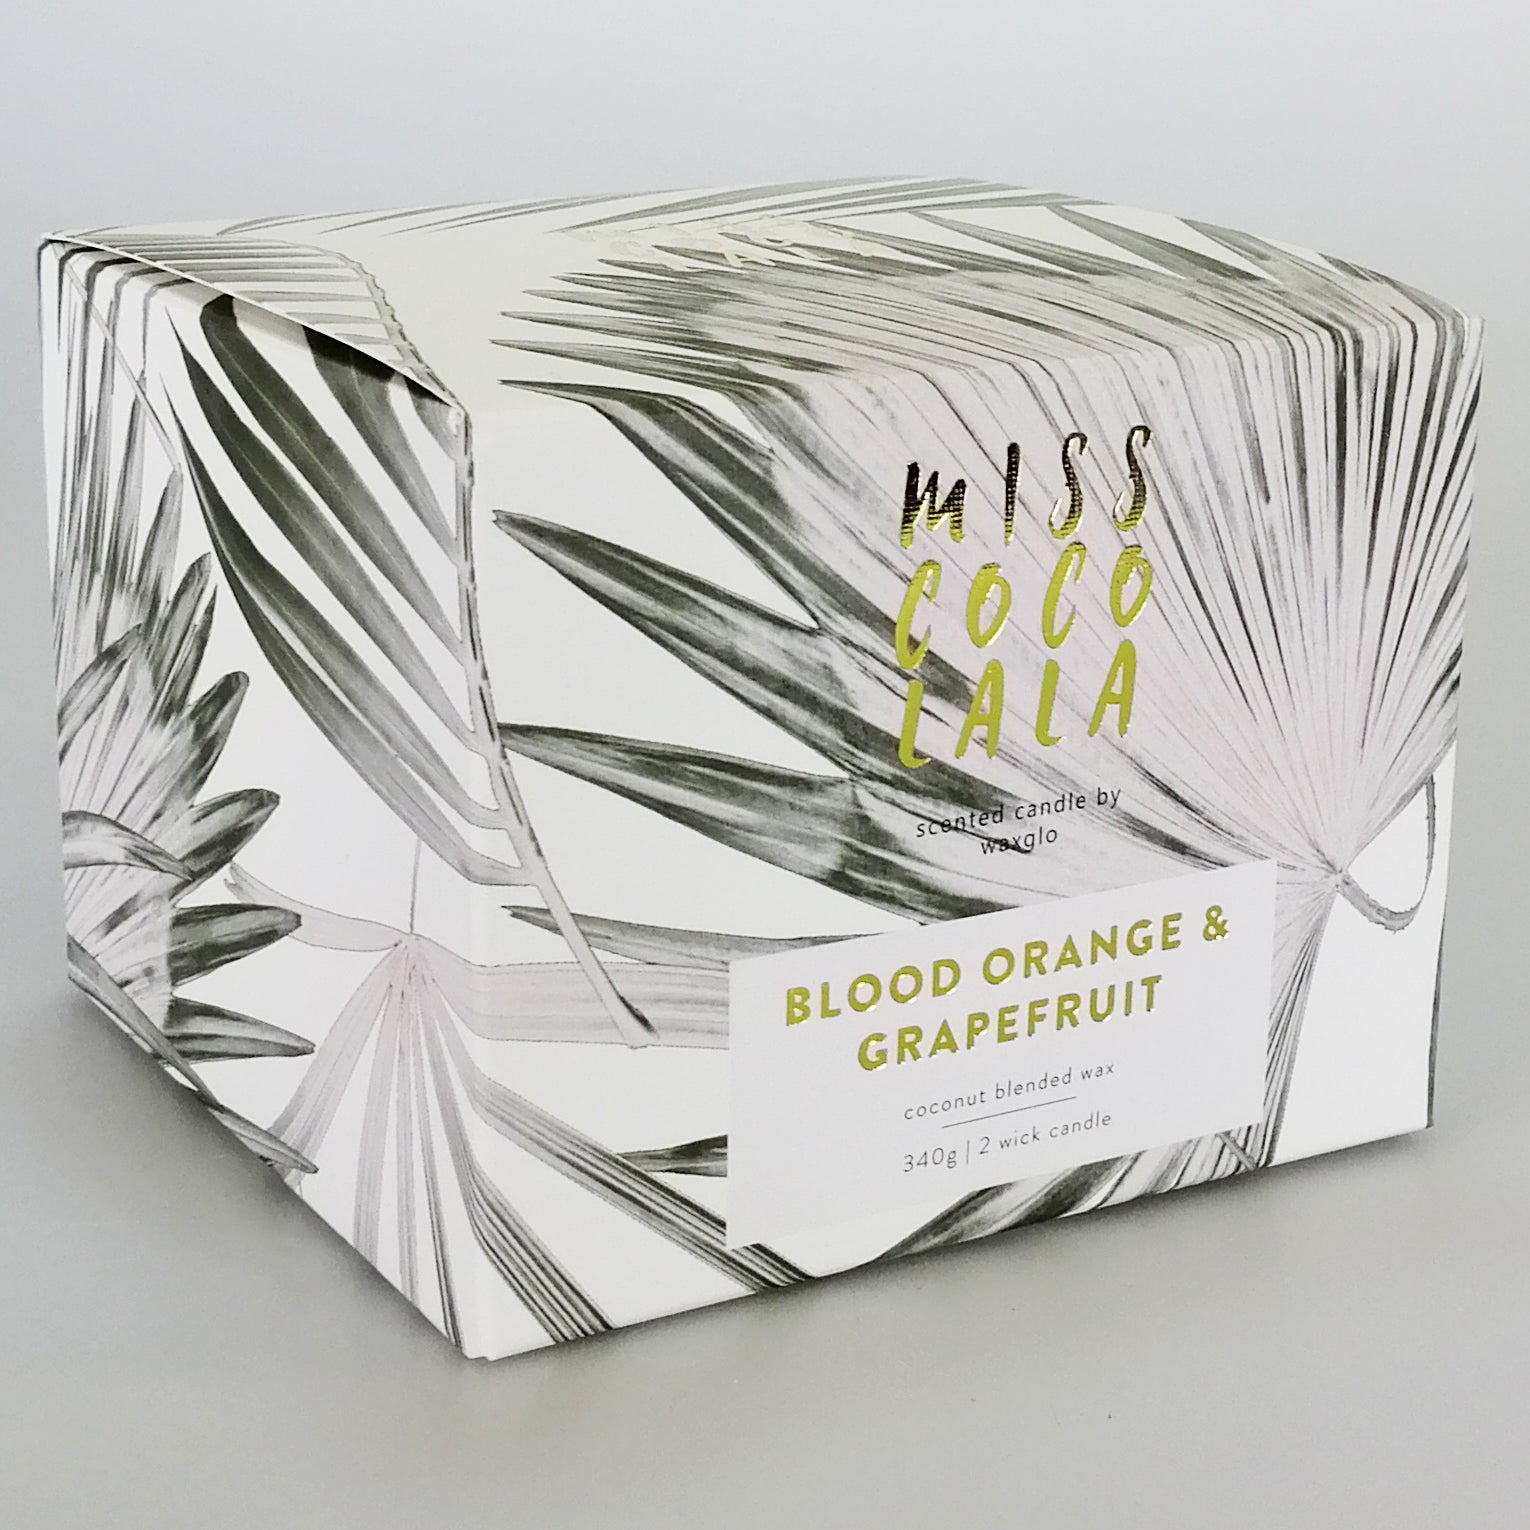 Miss Coco Lala - Coconut Wax Candle - Blood Orange & Grapefruit - 340g